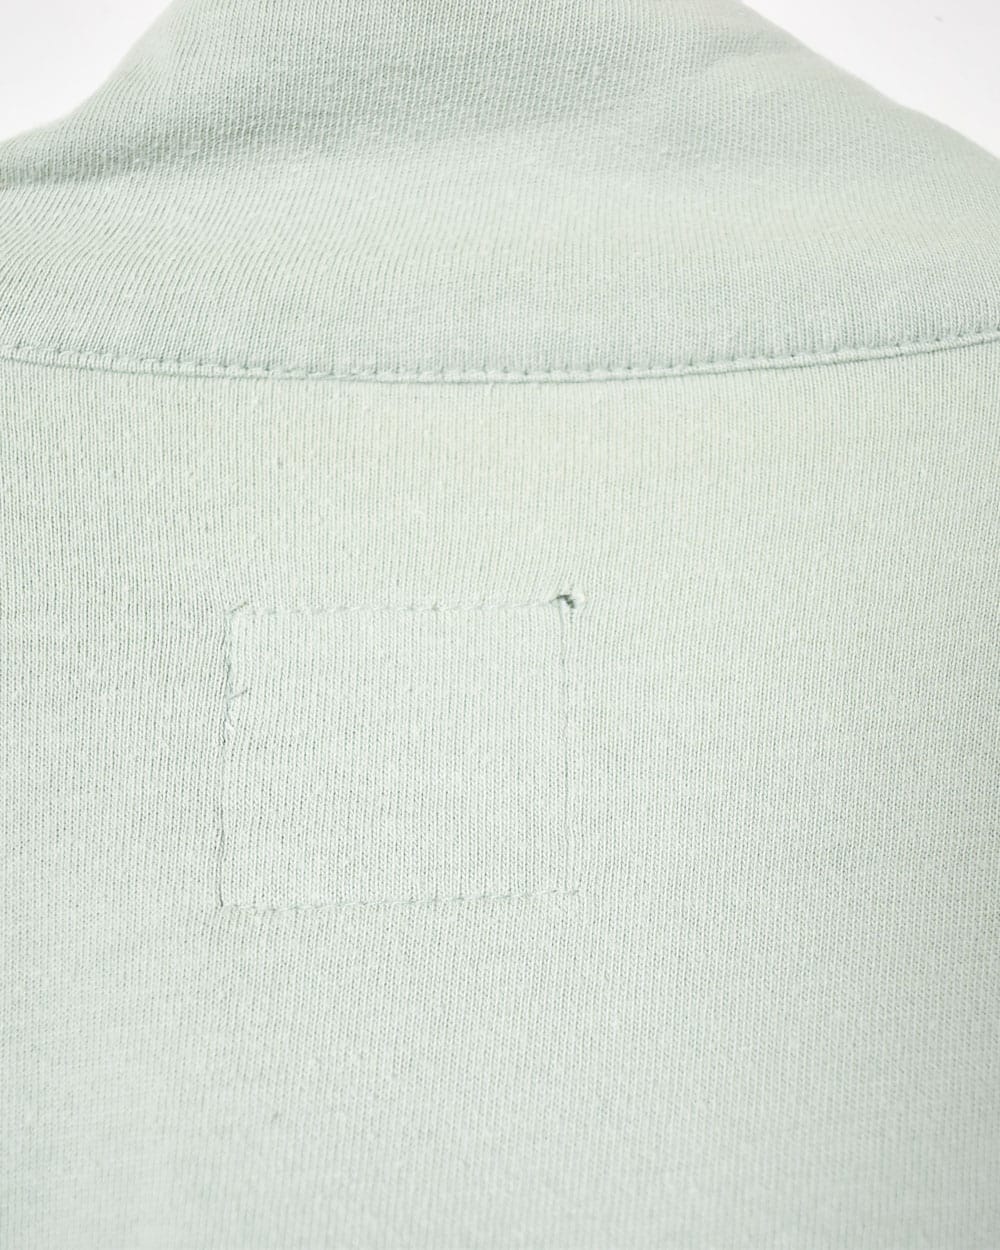 Green Nike 1/4 Zip Sweatshirt - X-Large